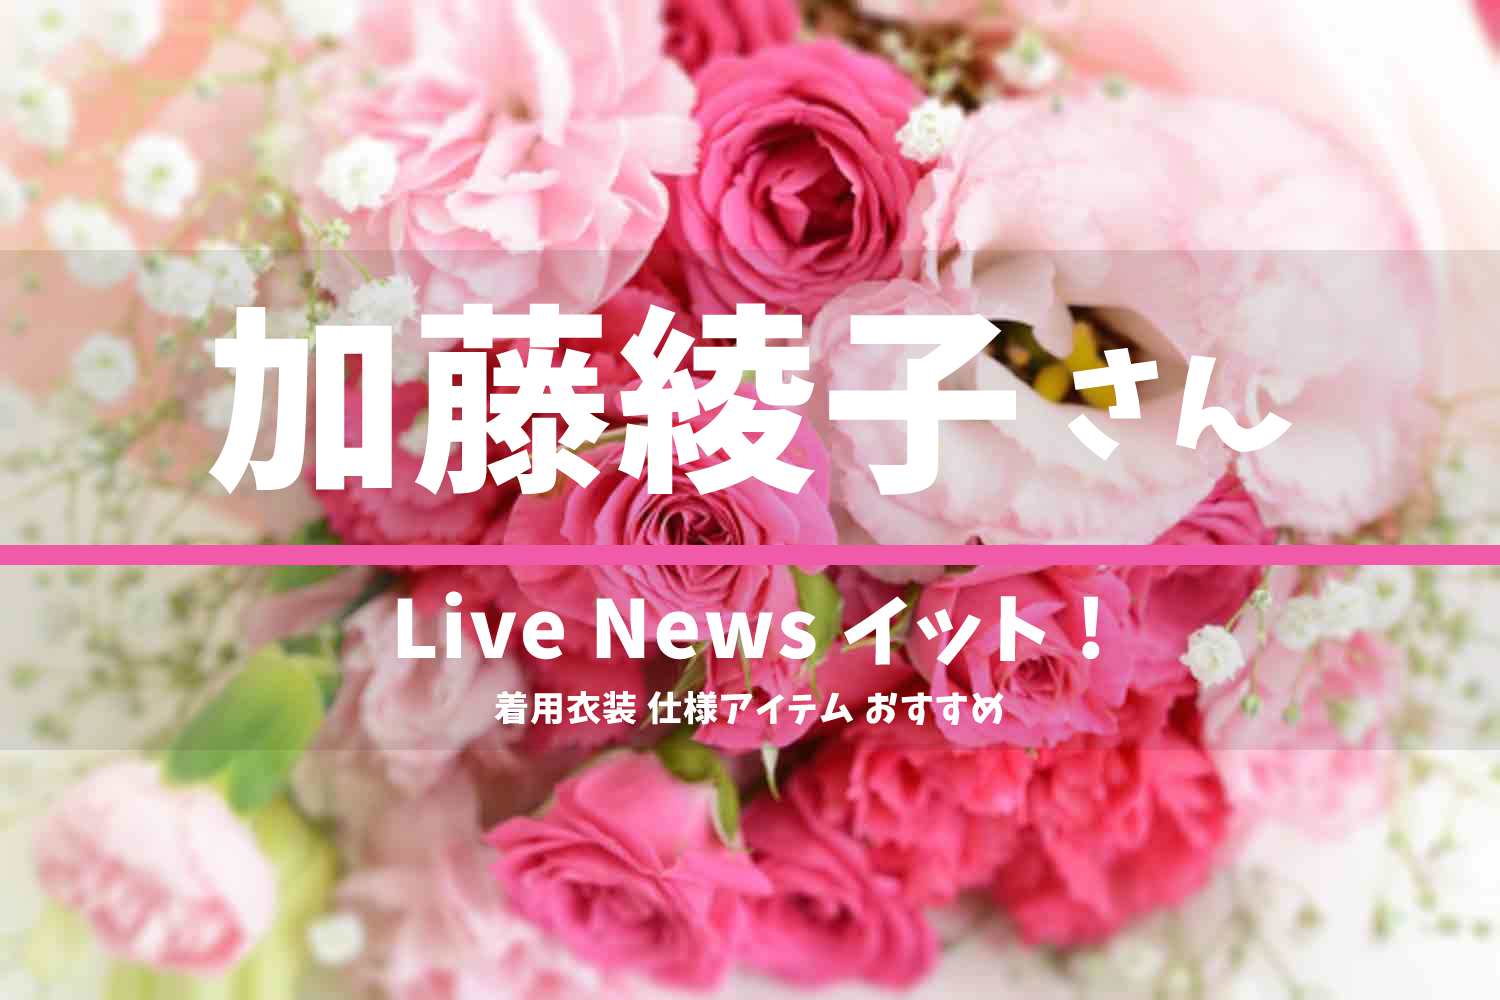 Live News イット! 加藤綾子さん 番組 衣装 2022年4月4日放送